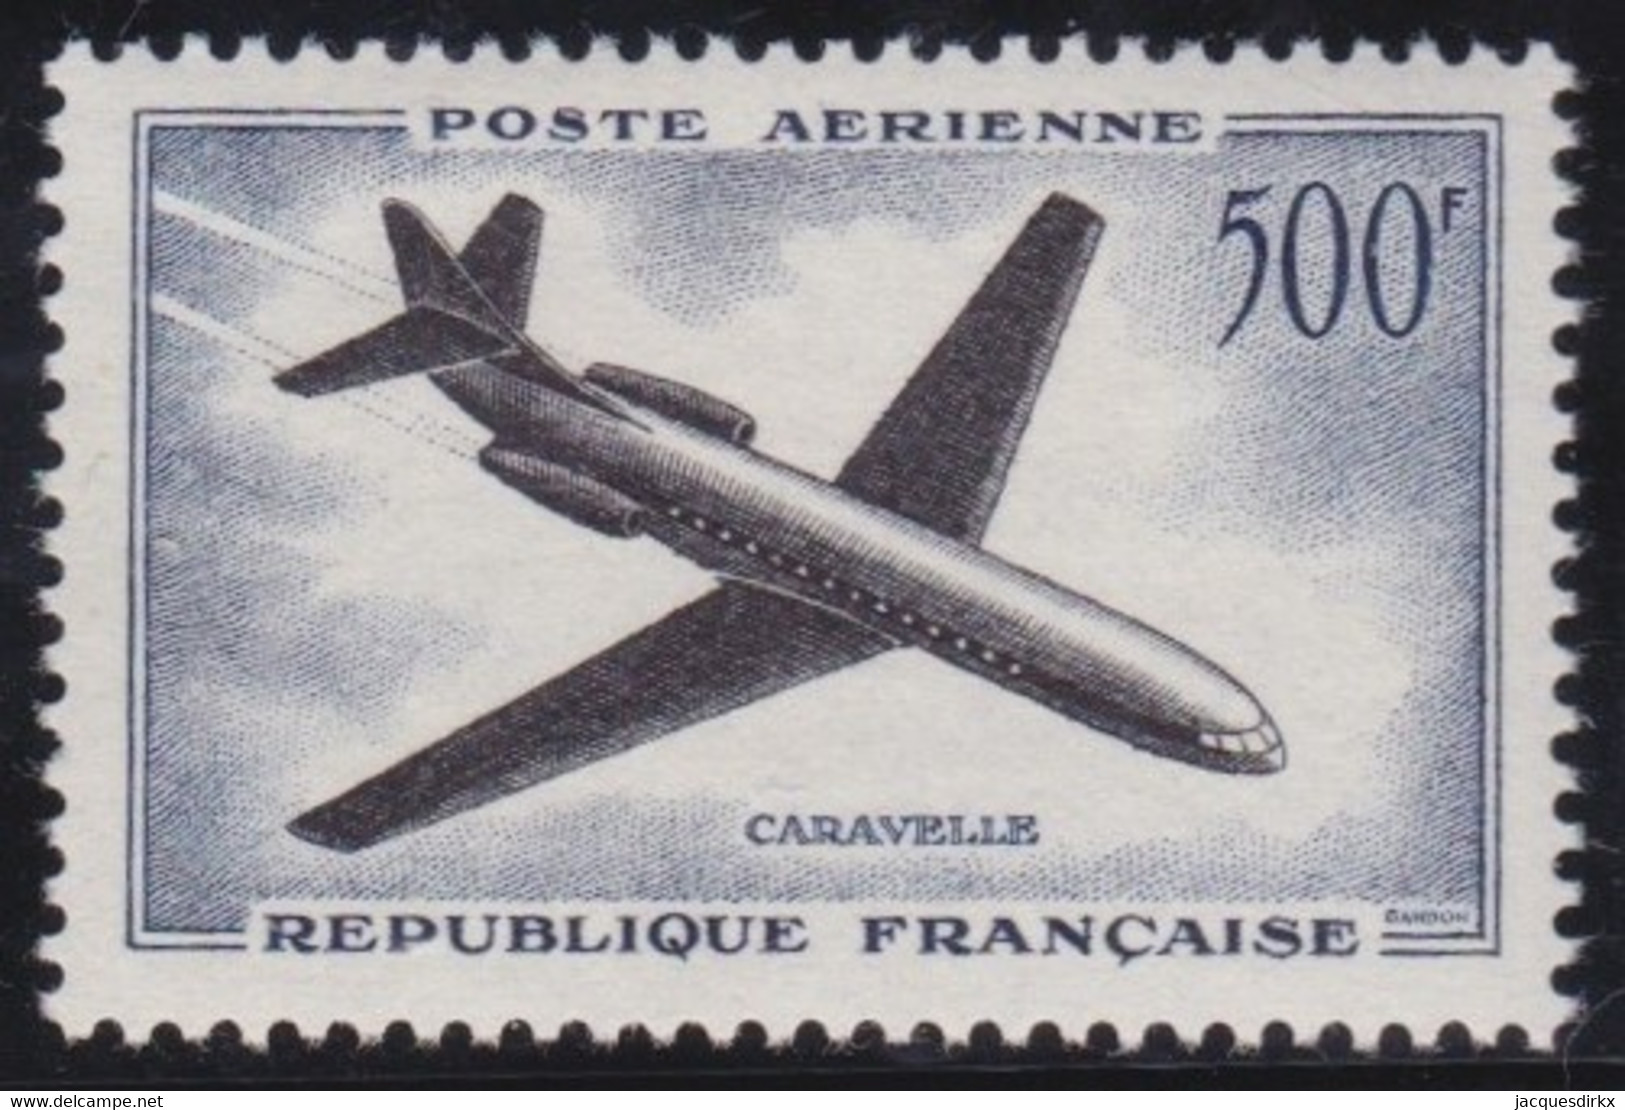 France   .   Y&T   .     PA  36       .    *     .    Neuf Avec Gomme - 1927-1959 Neufs